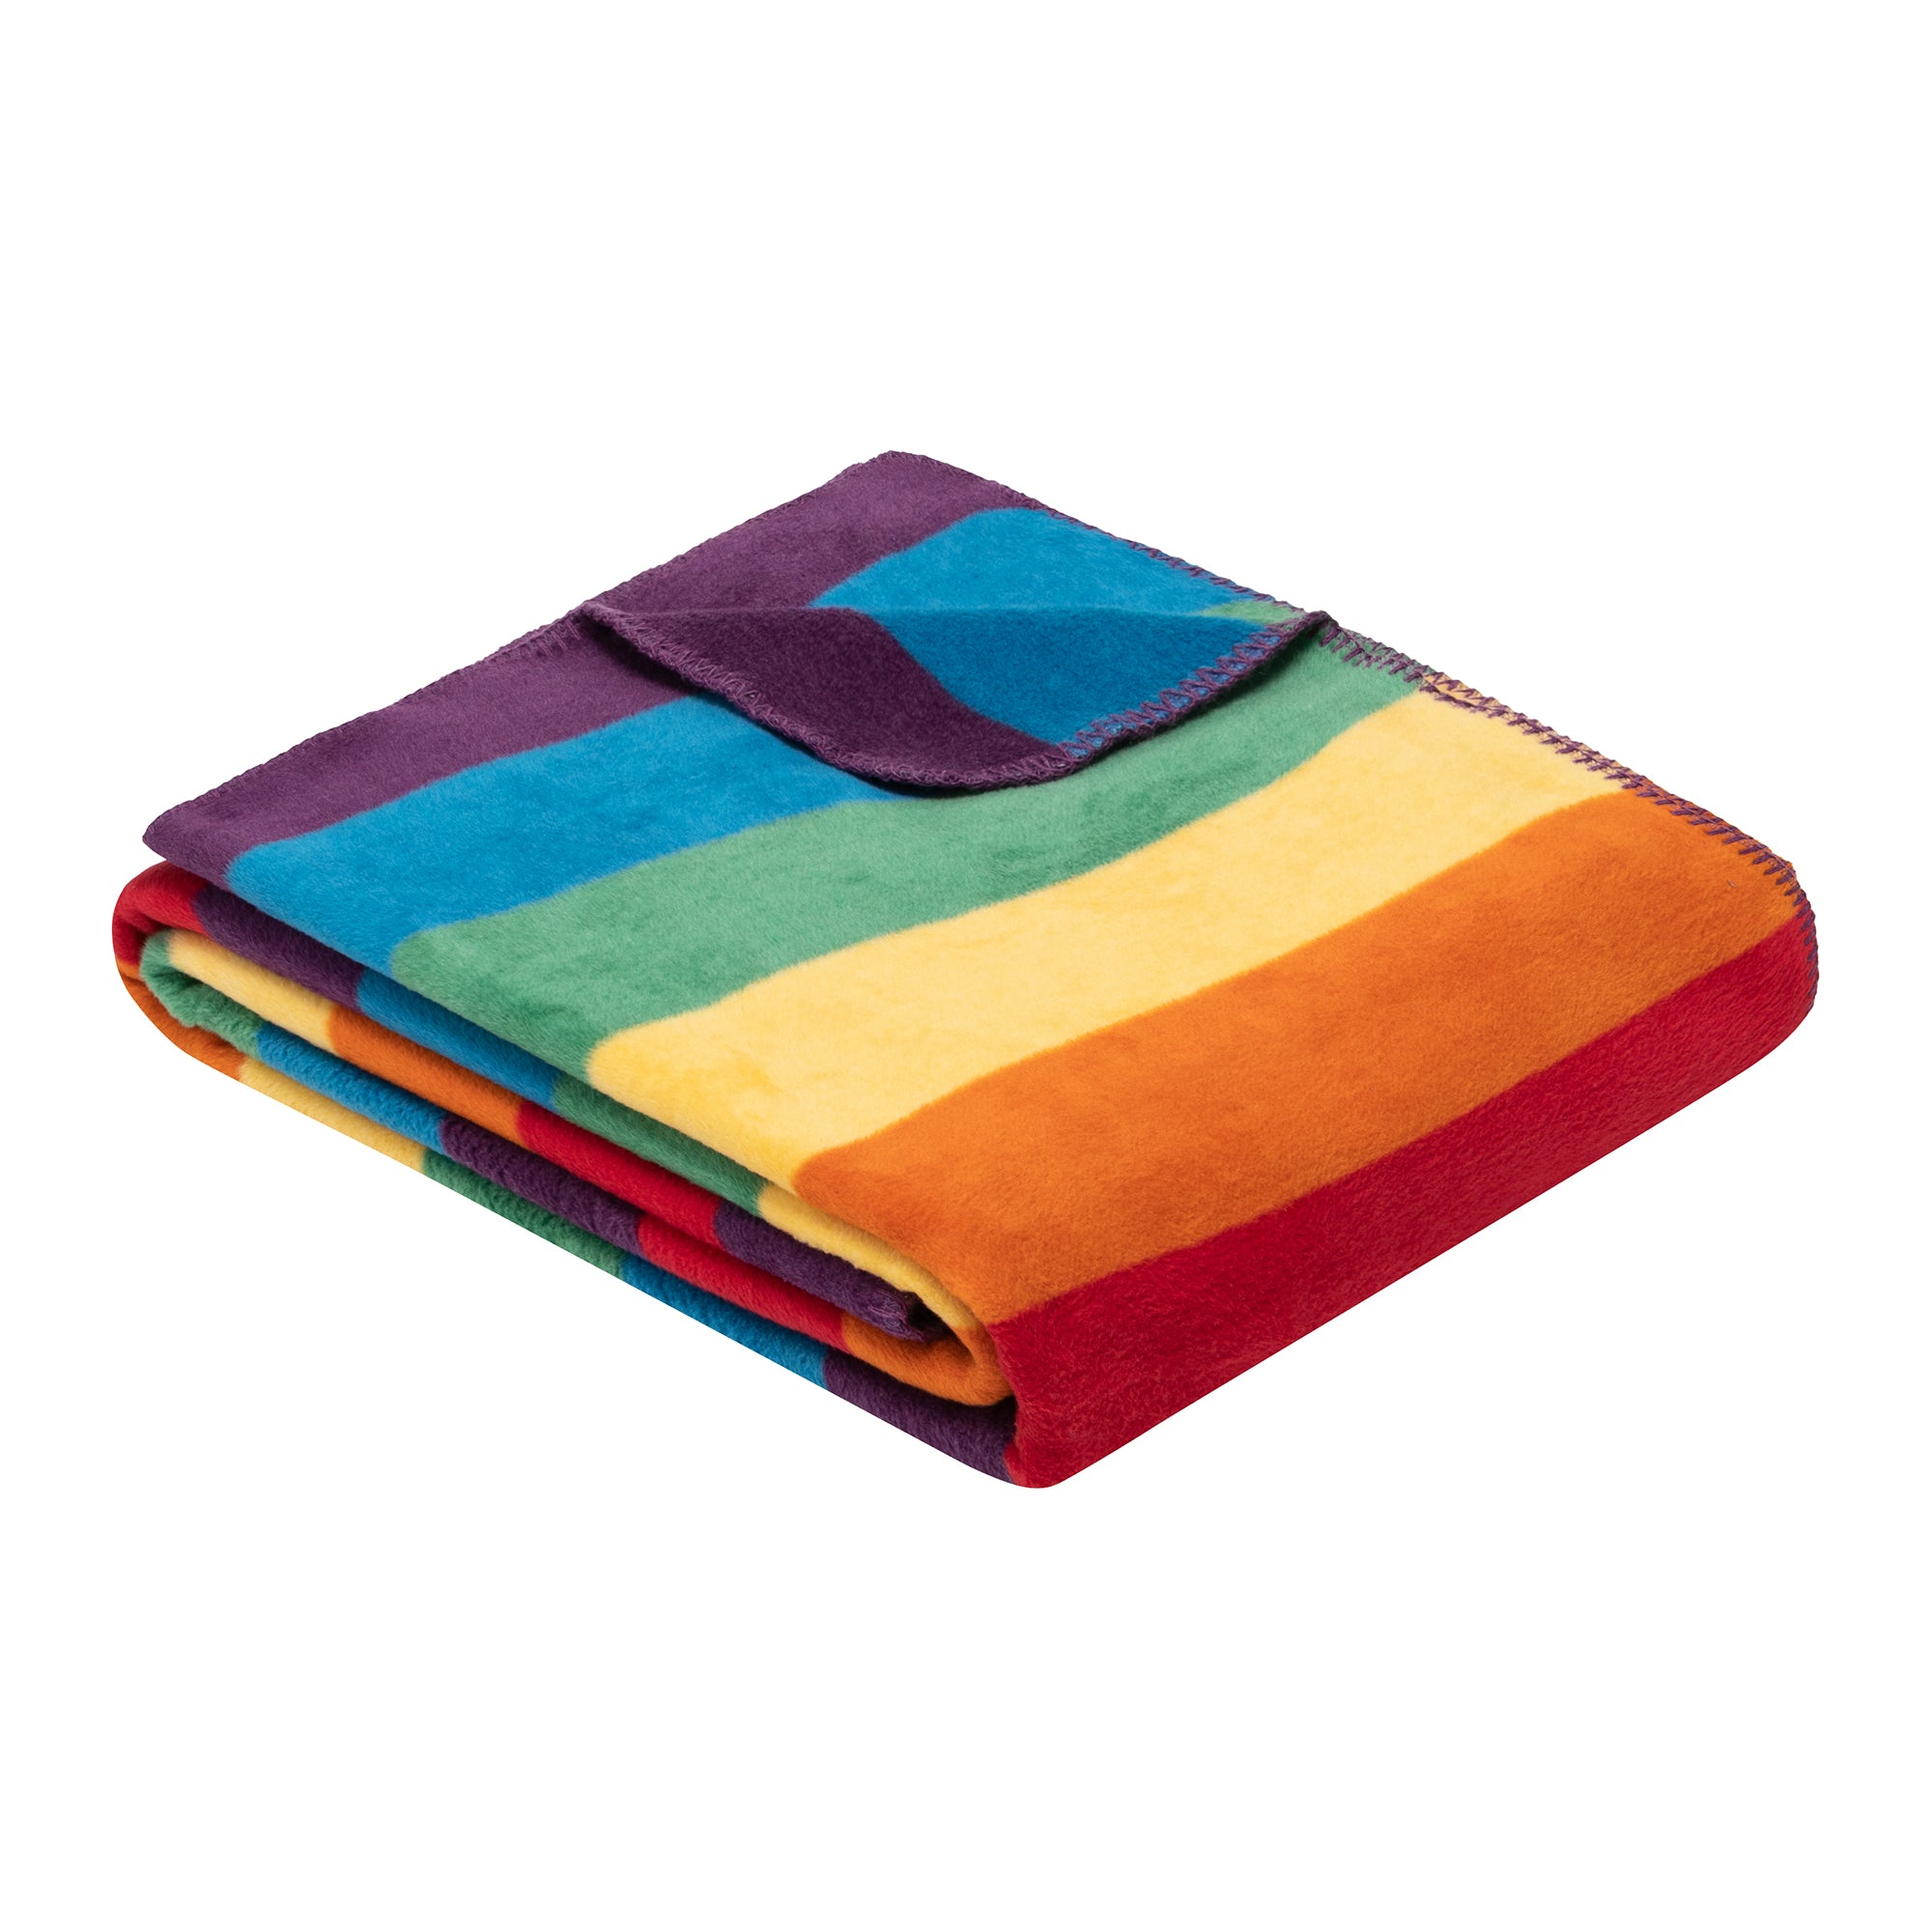 Ibena Pachuca Luxury Blanket - Multi